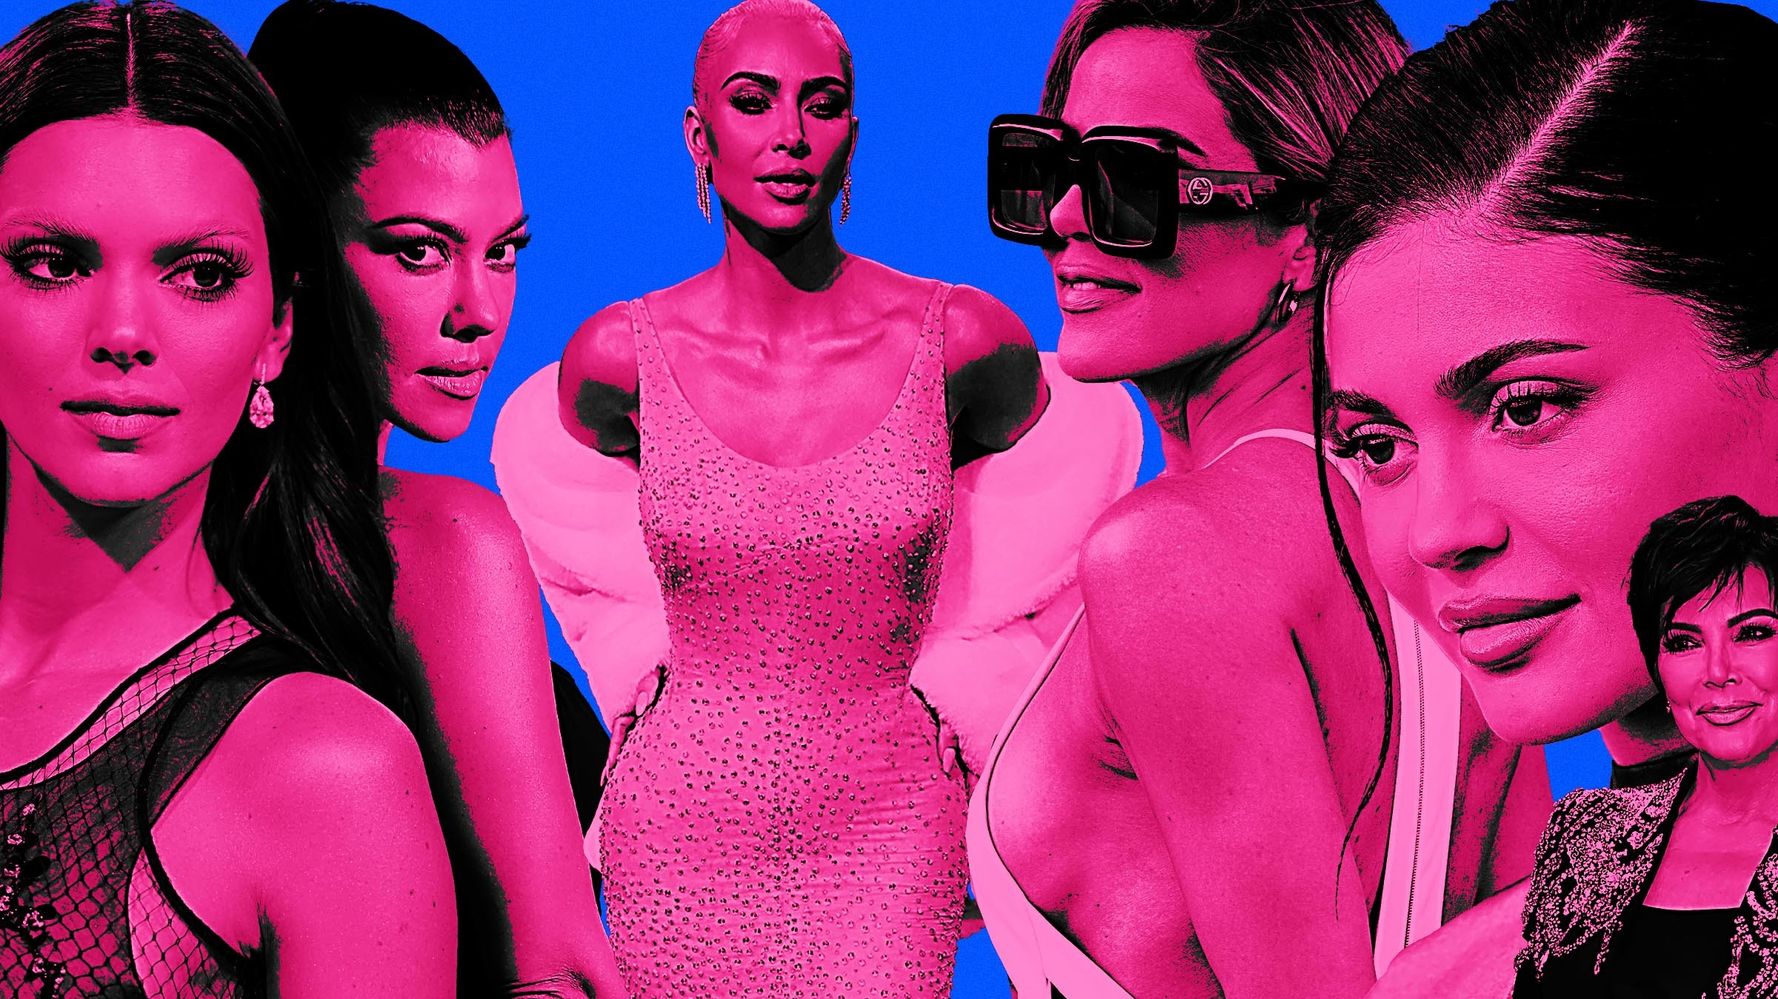 Kim Kardashian glows in rare makeup-free photo as she poses with